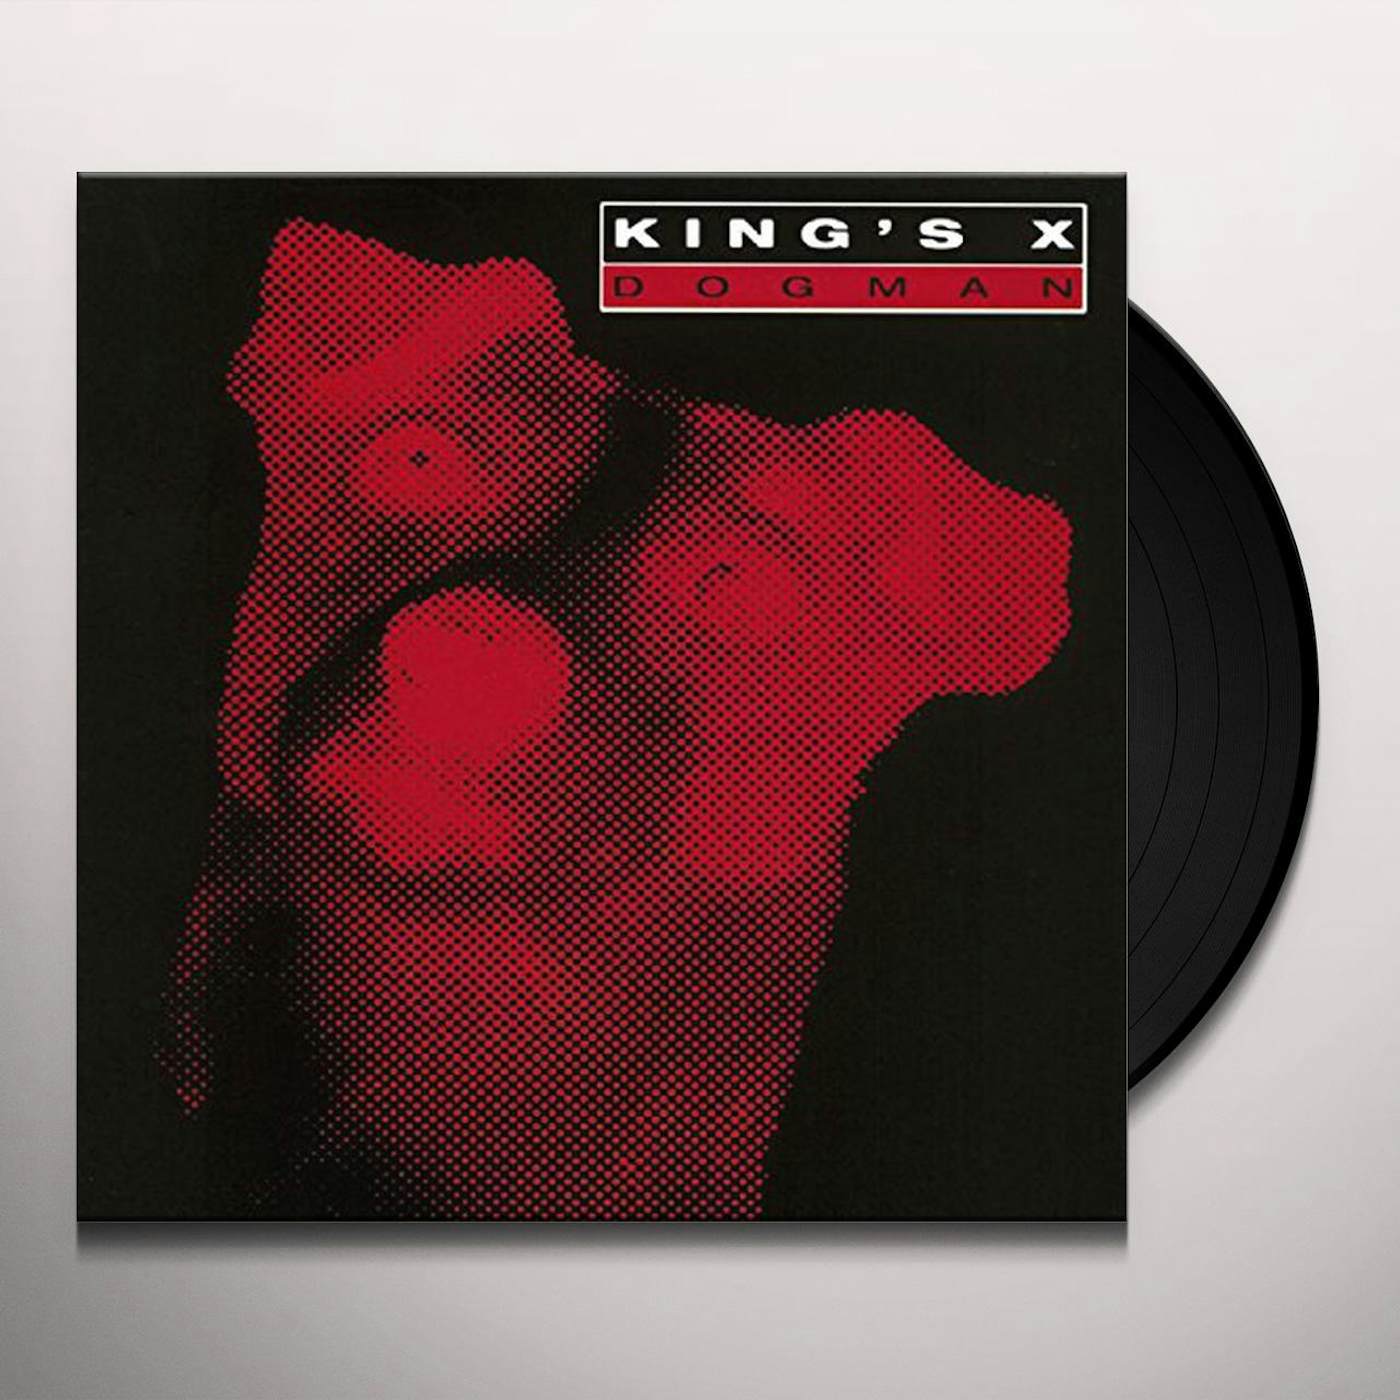 King's X Dogman Vinyl Record